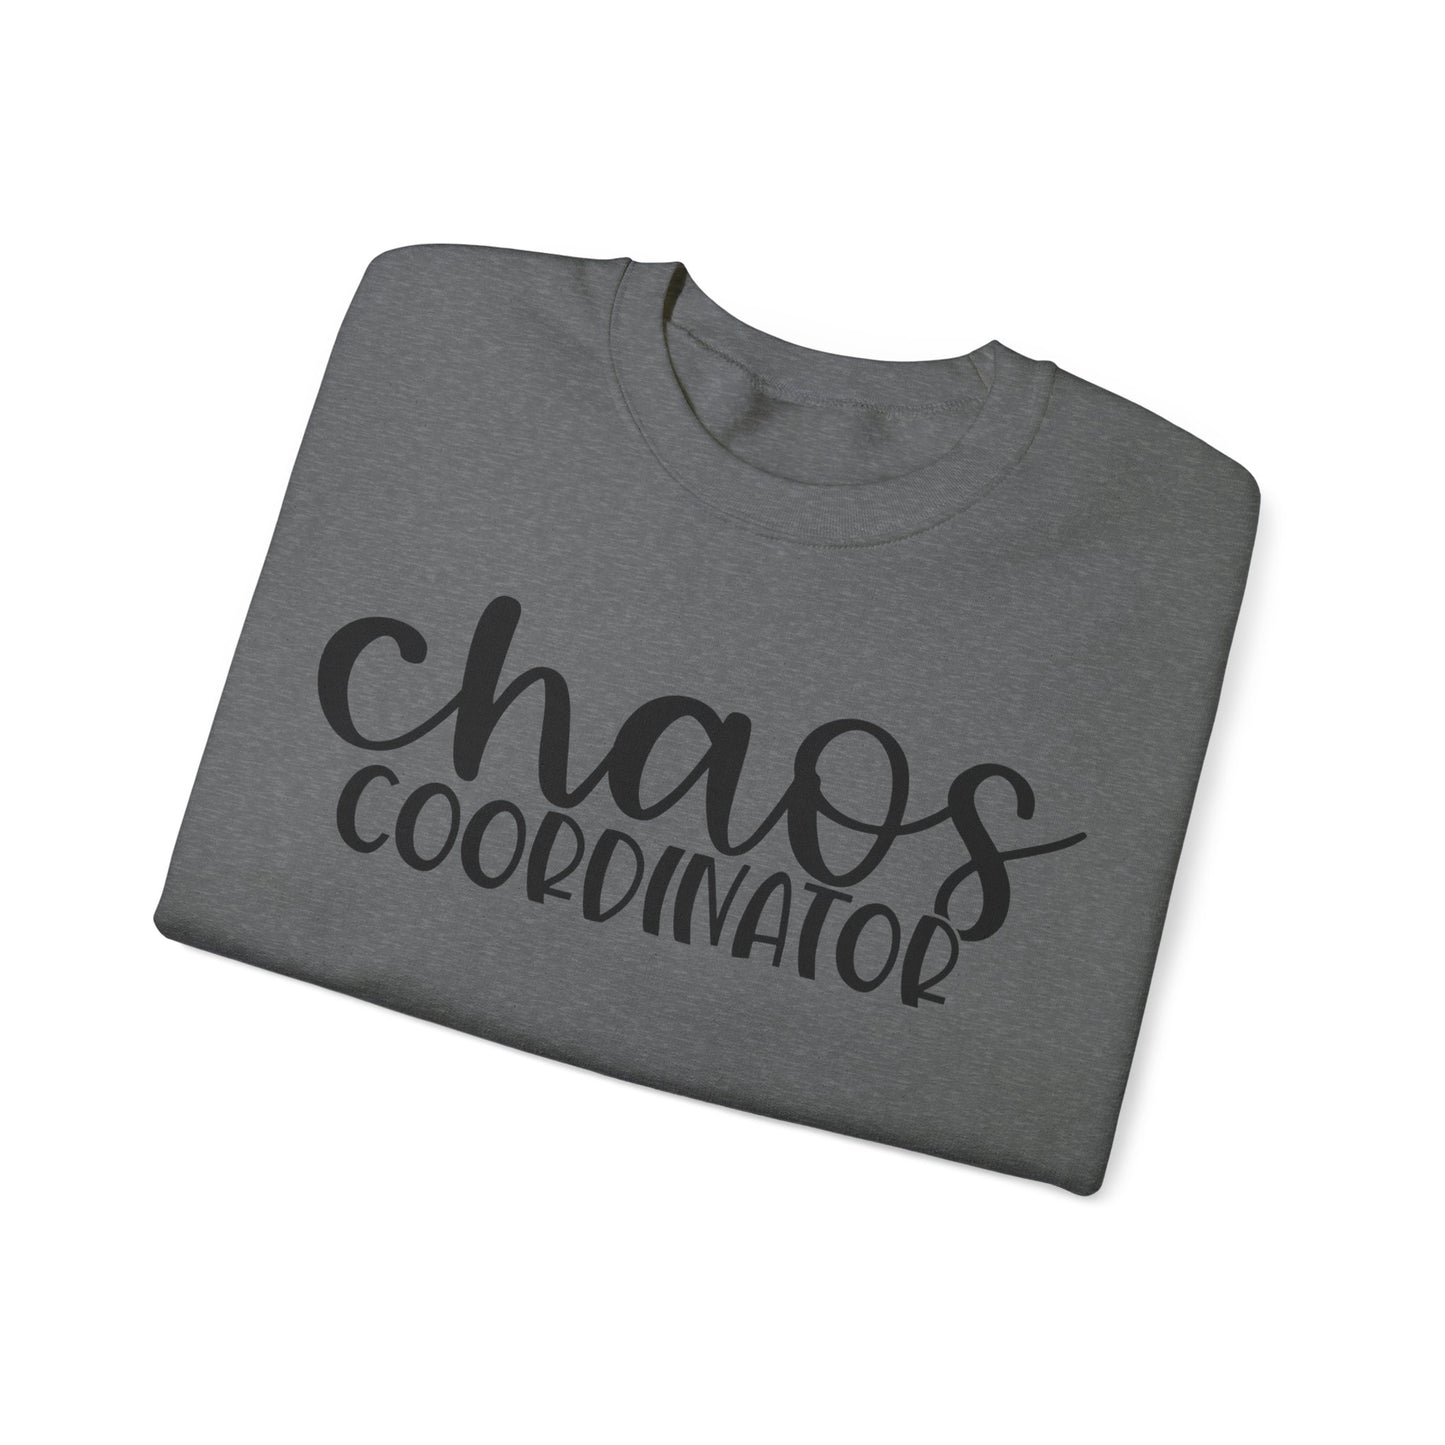 Chaos Coordinator - Crewneck Sweatshirt